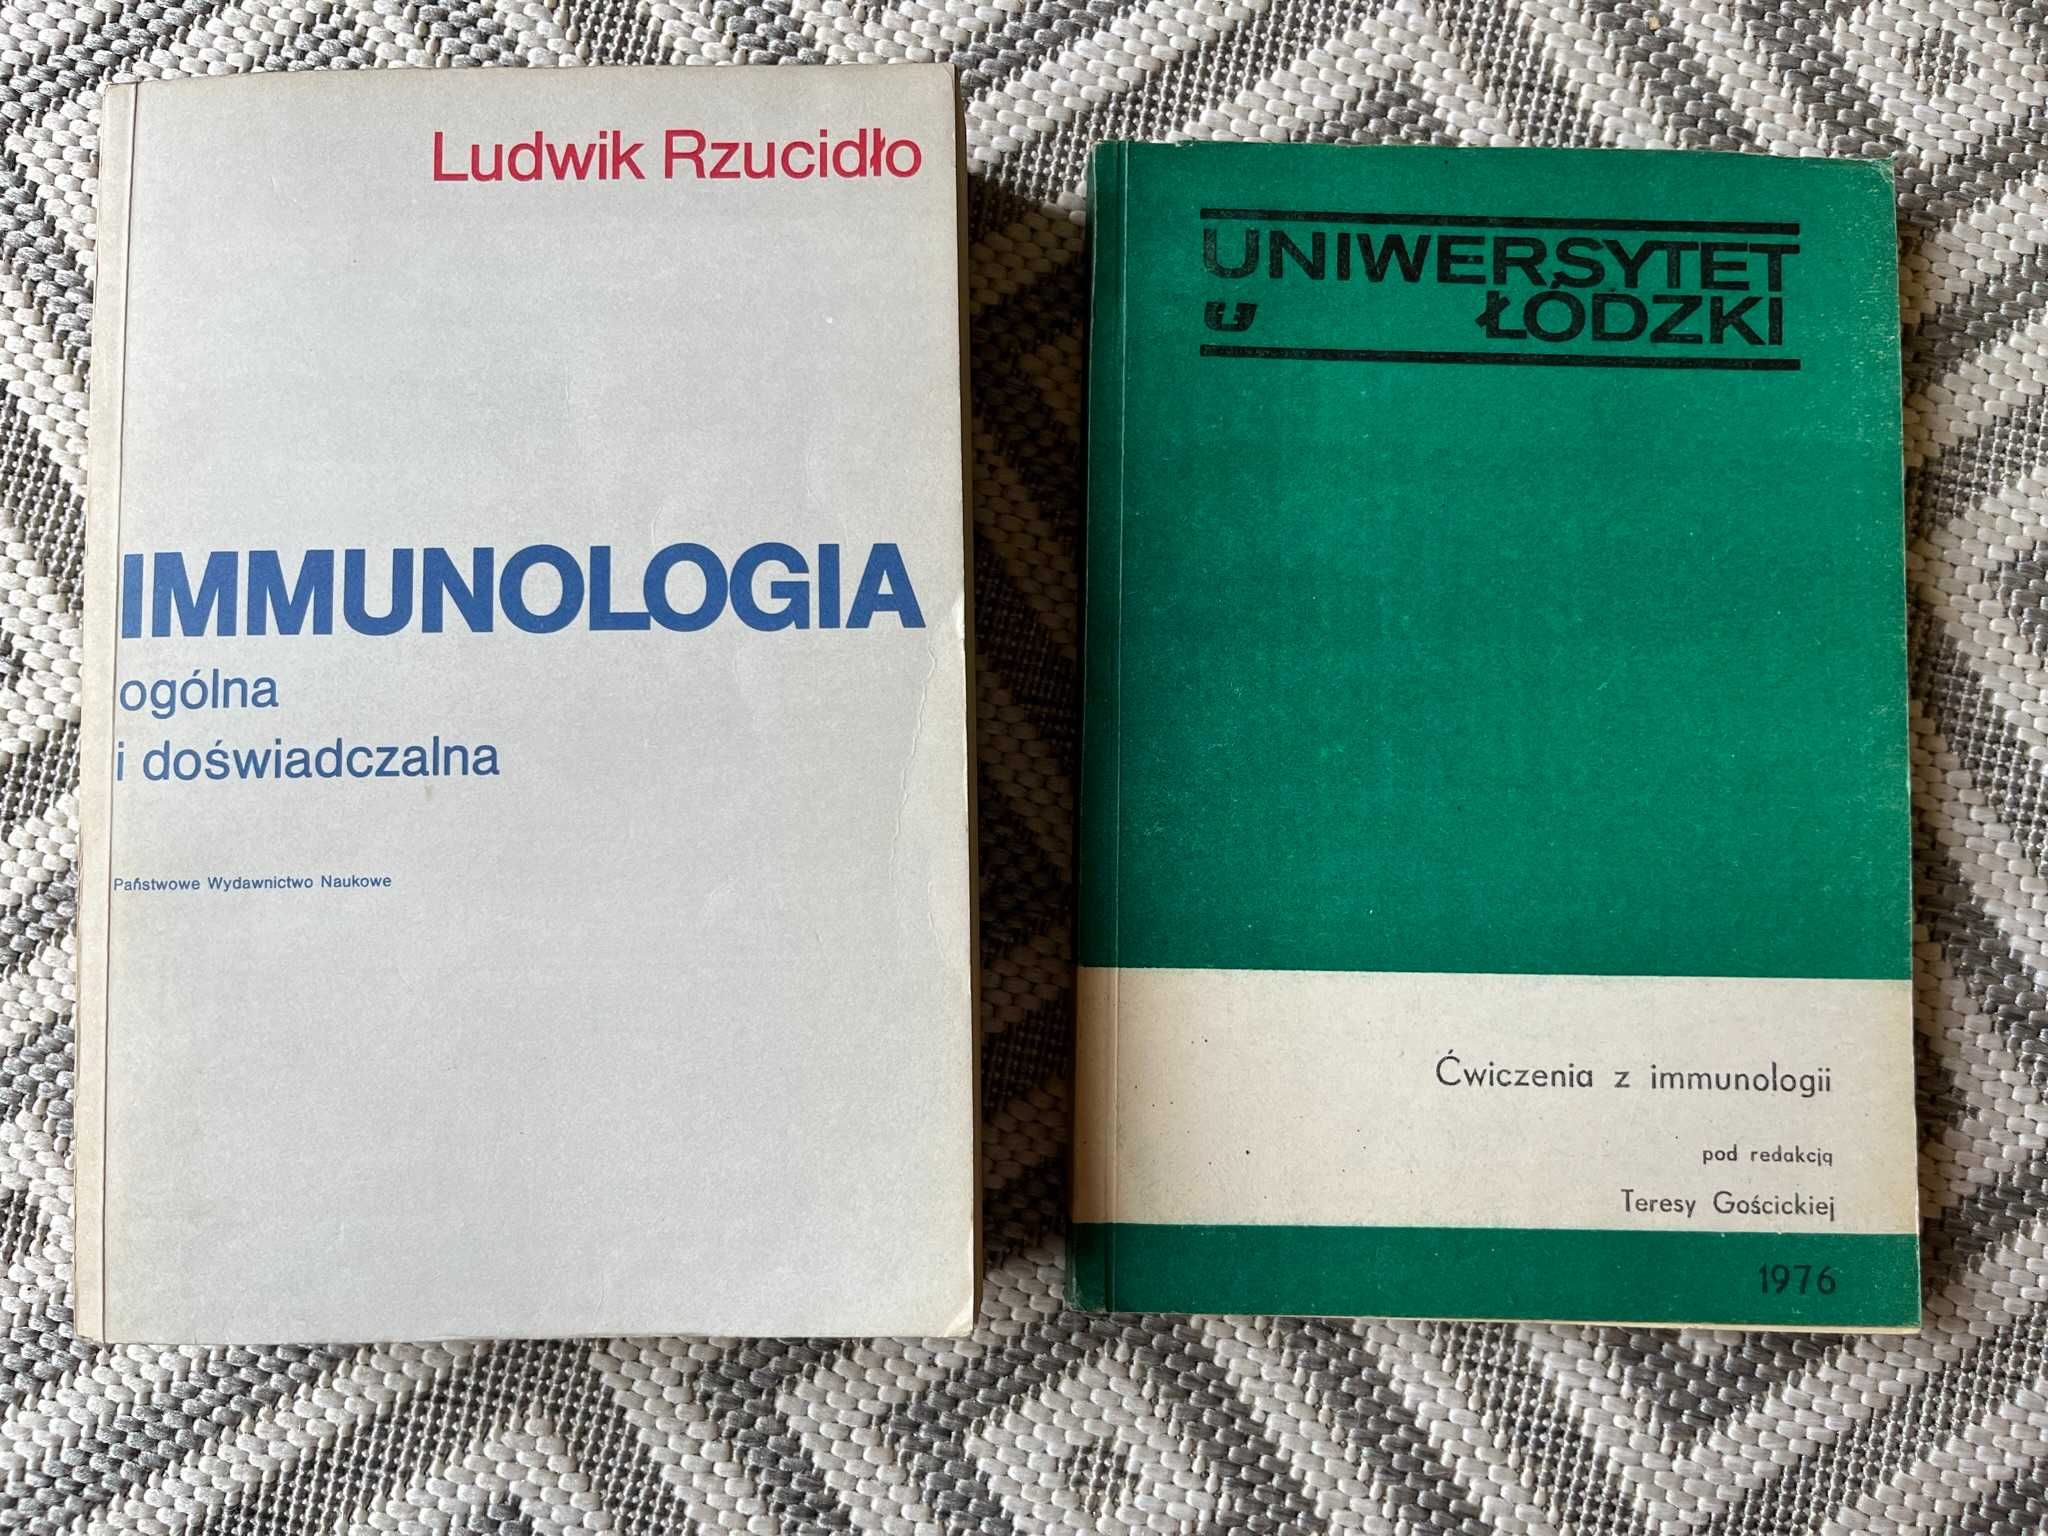 Immunologia zestaw książek